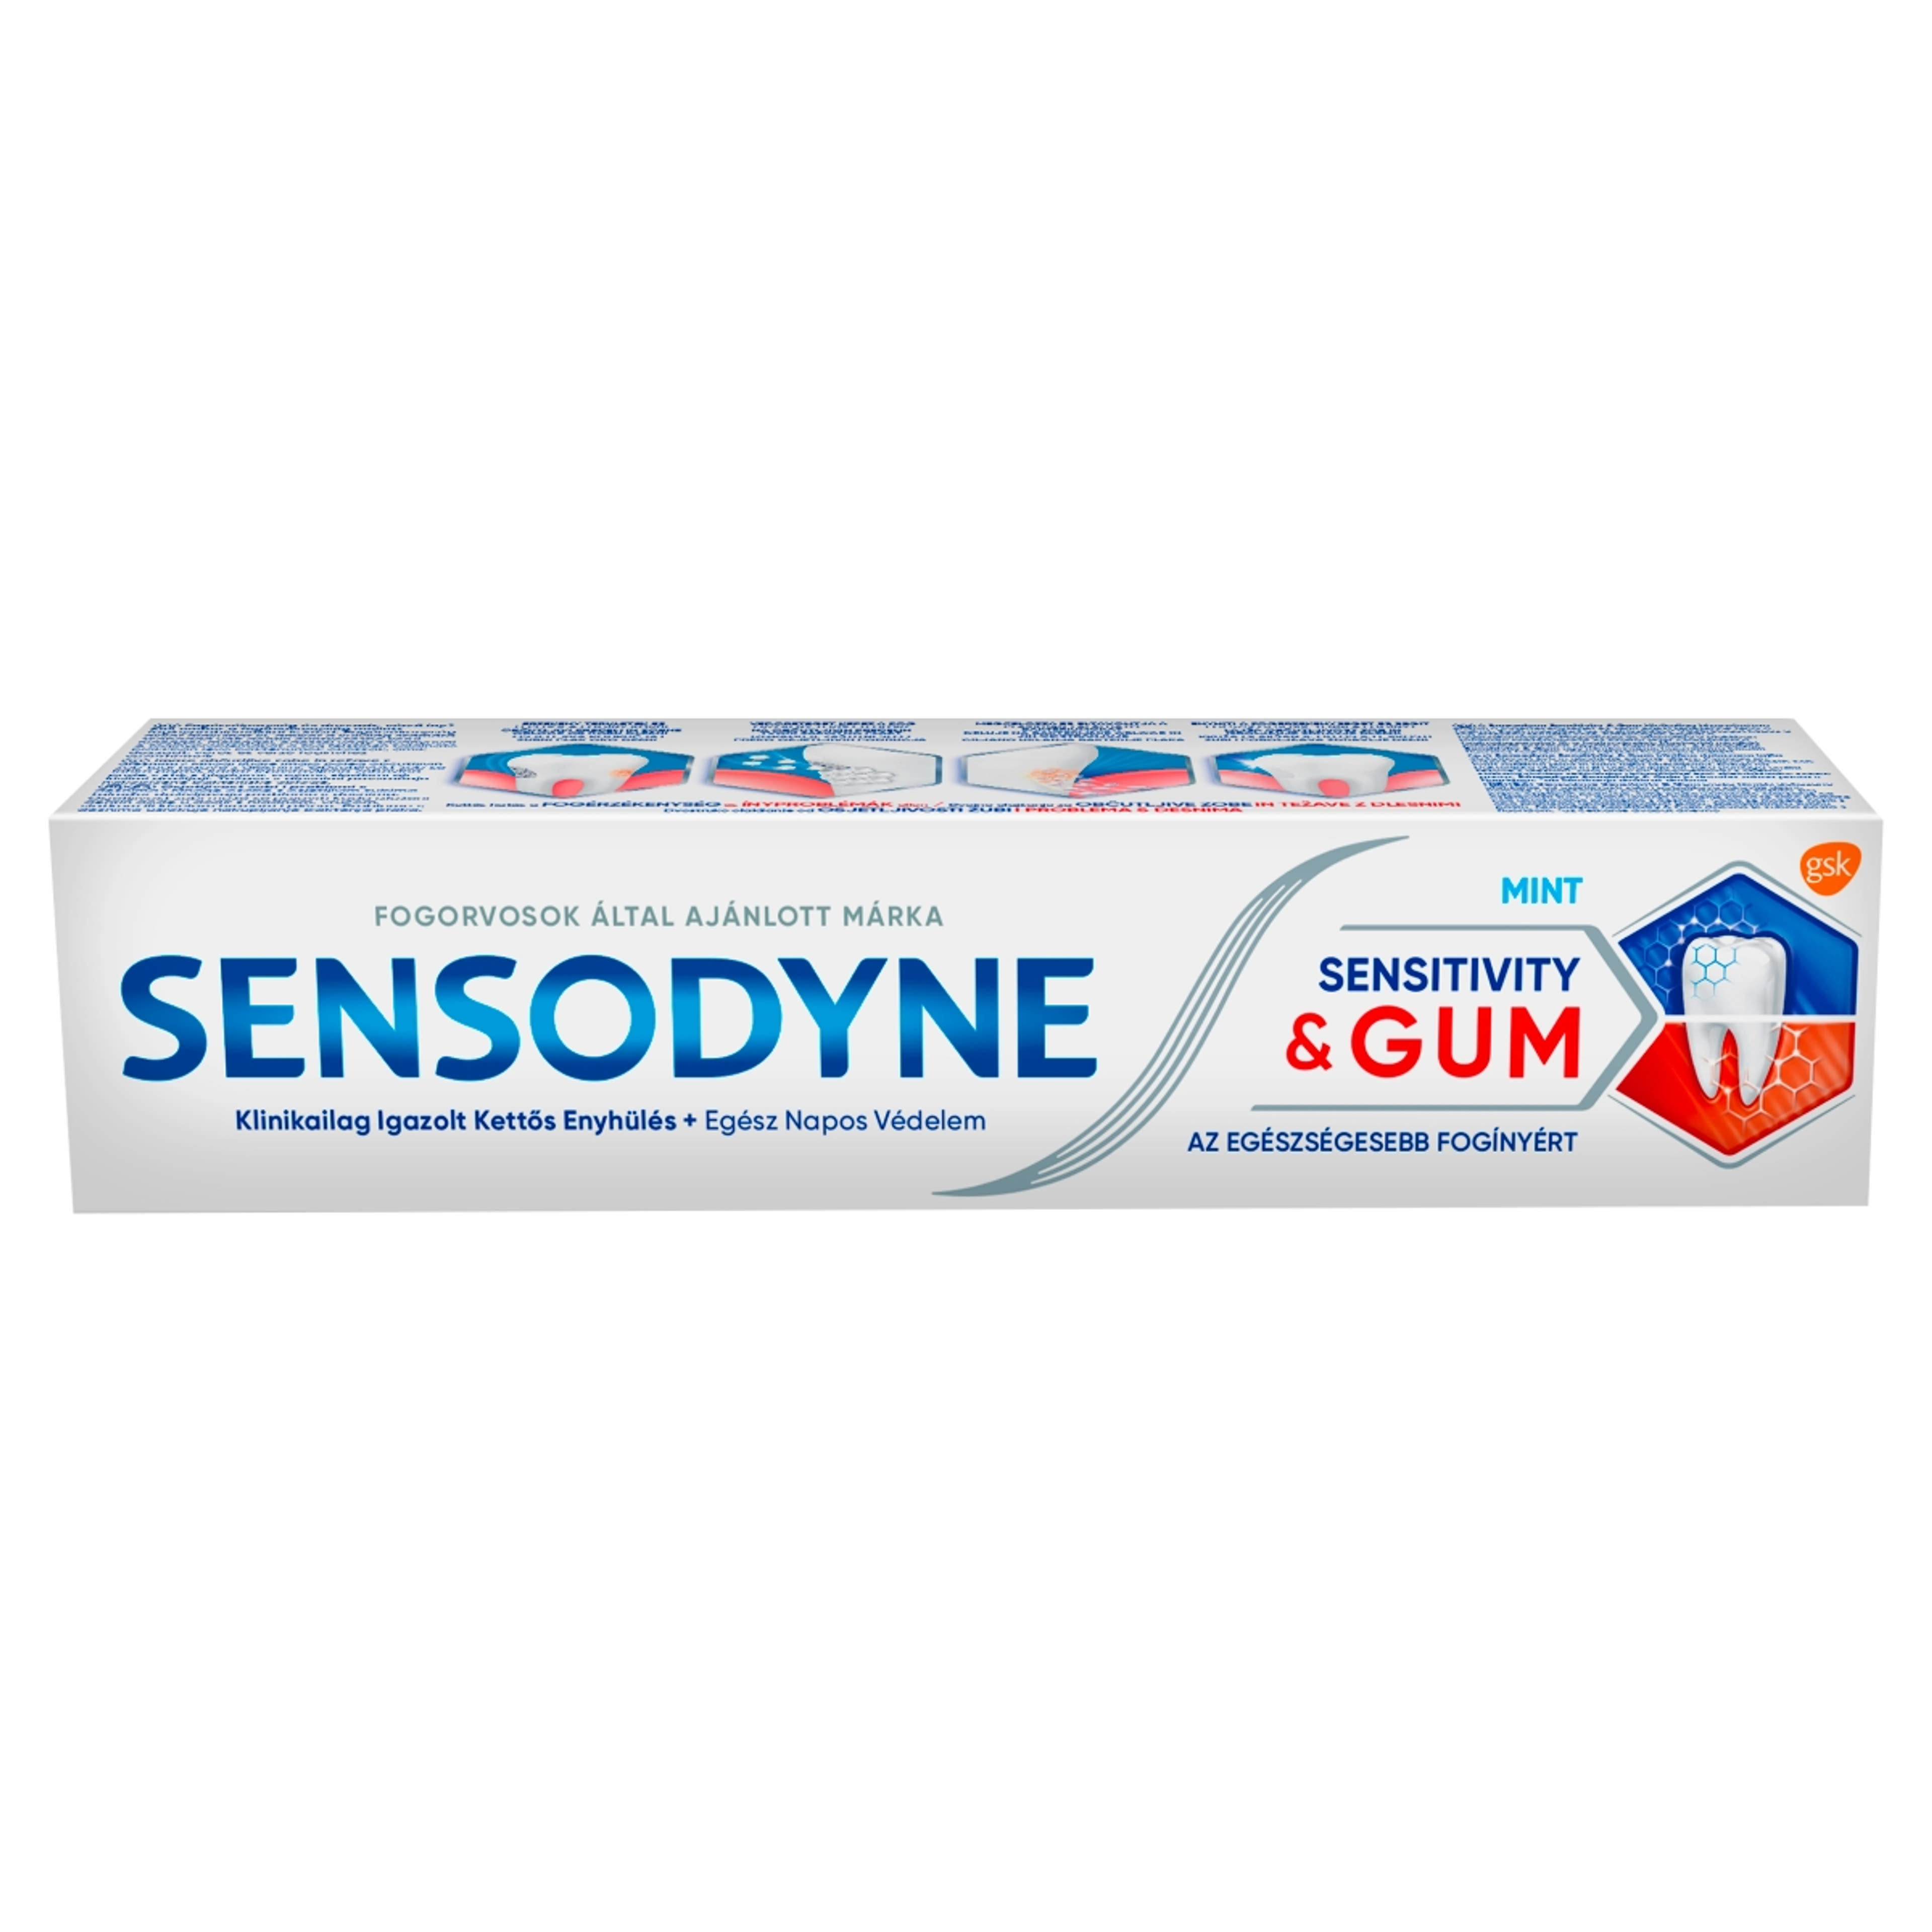 Sensodyne Sensitivity & Gum fogkrém - 75 ml-1